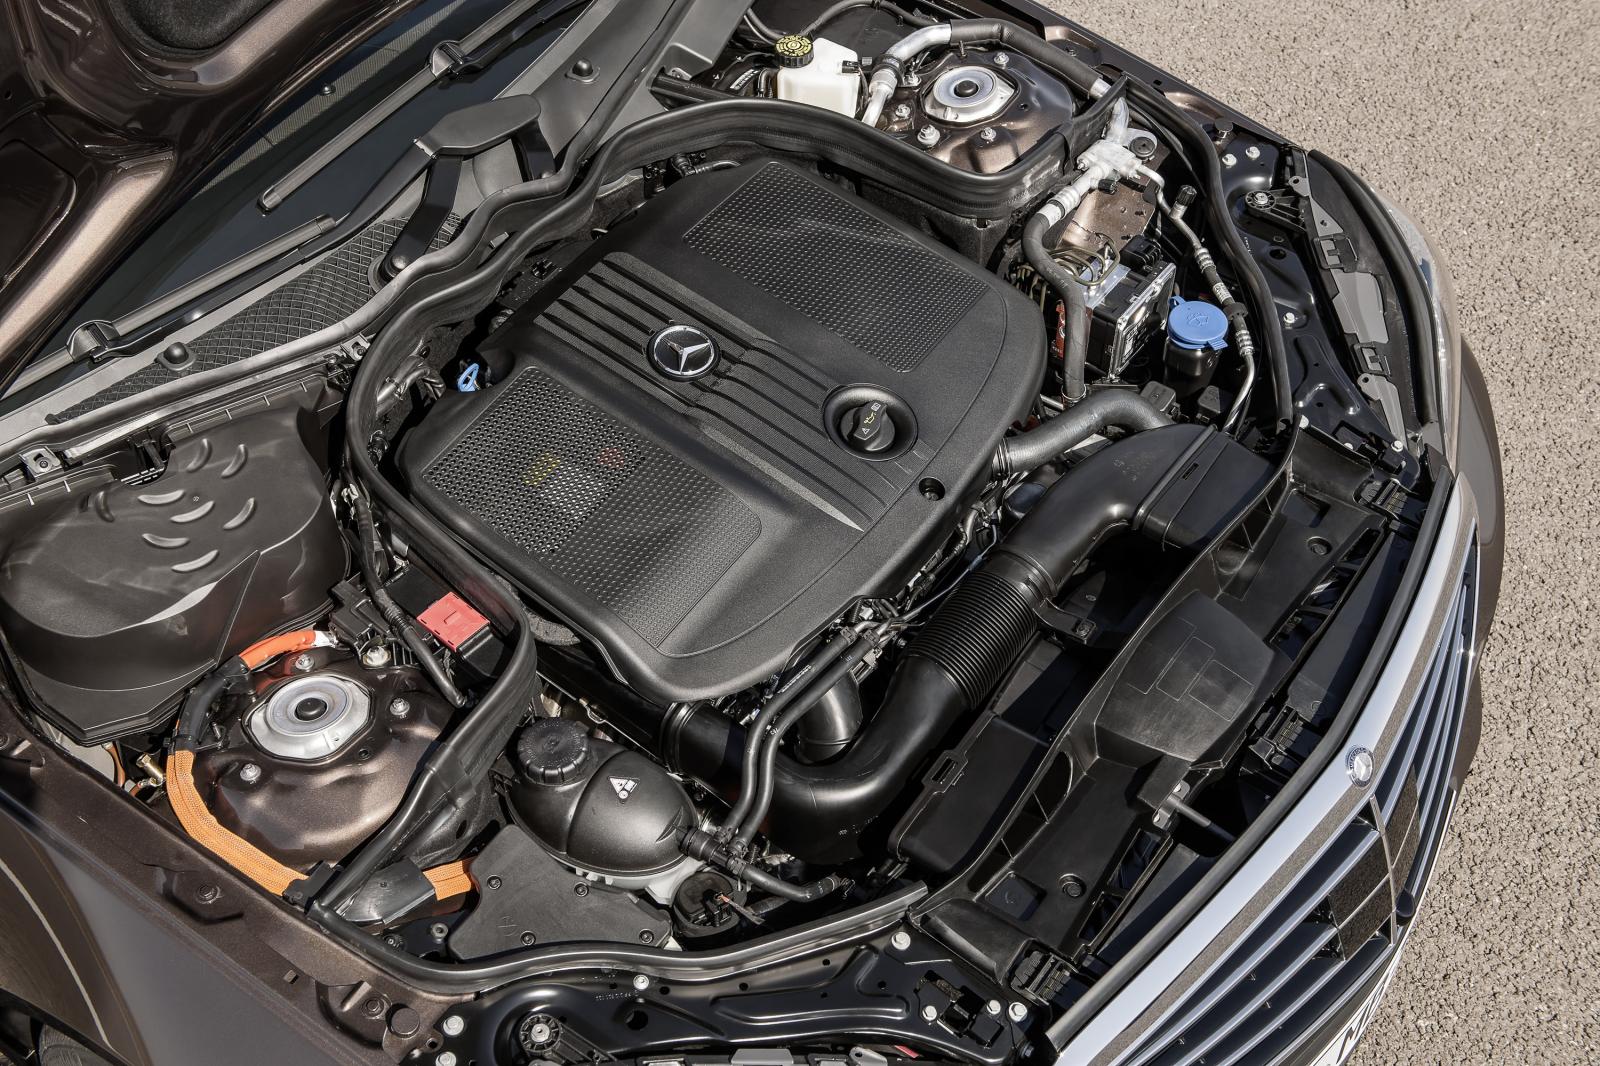 Mercedes Engines